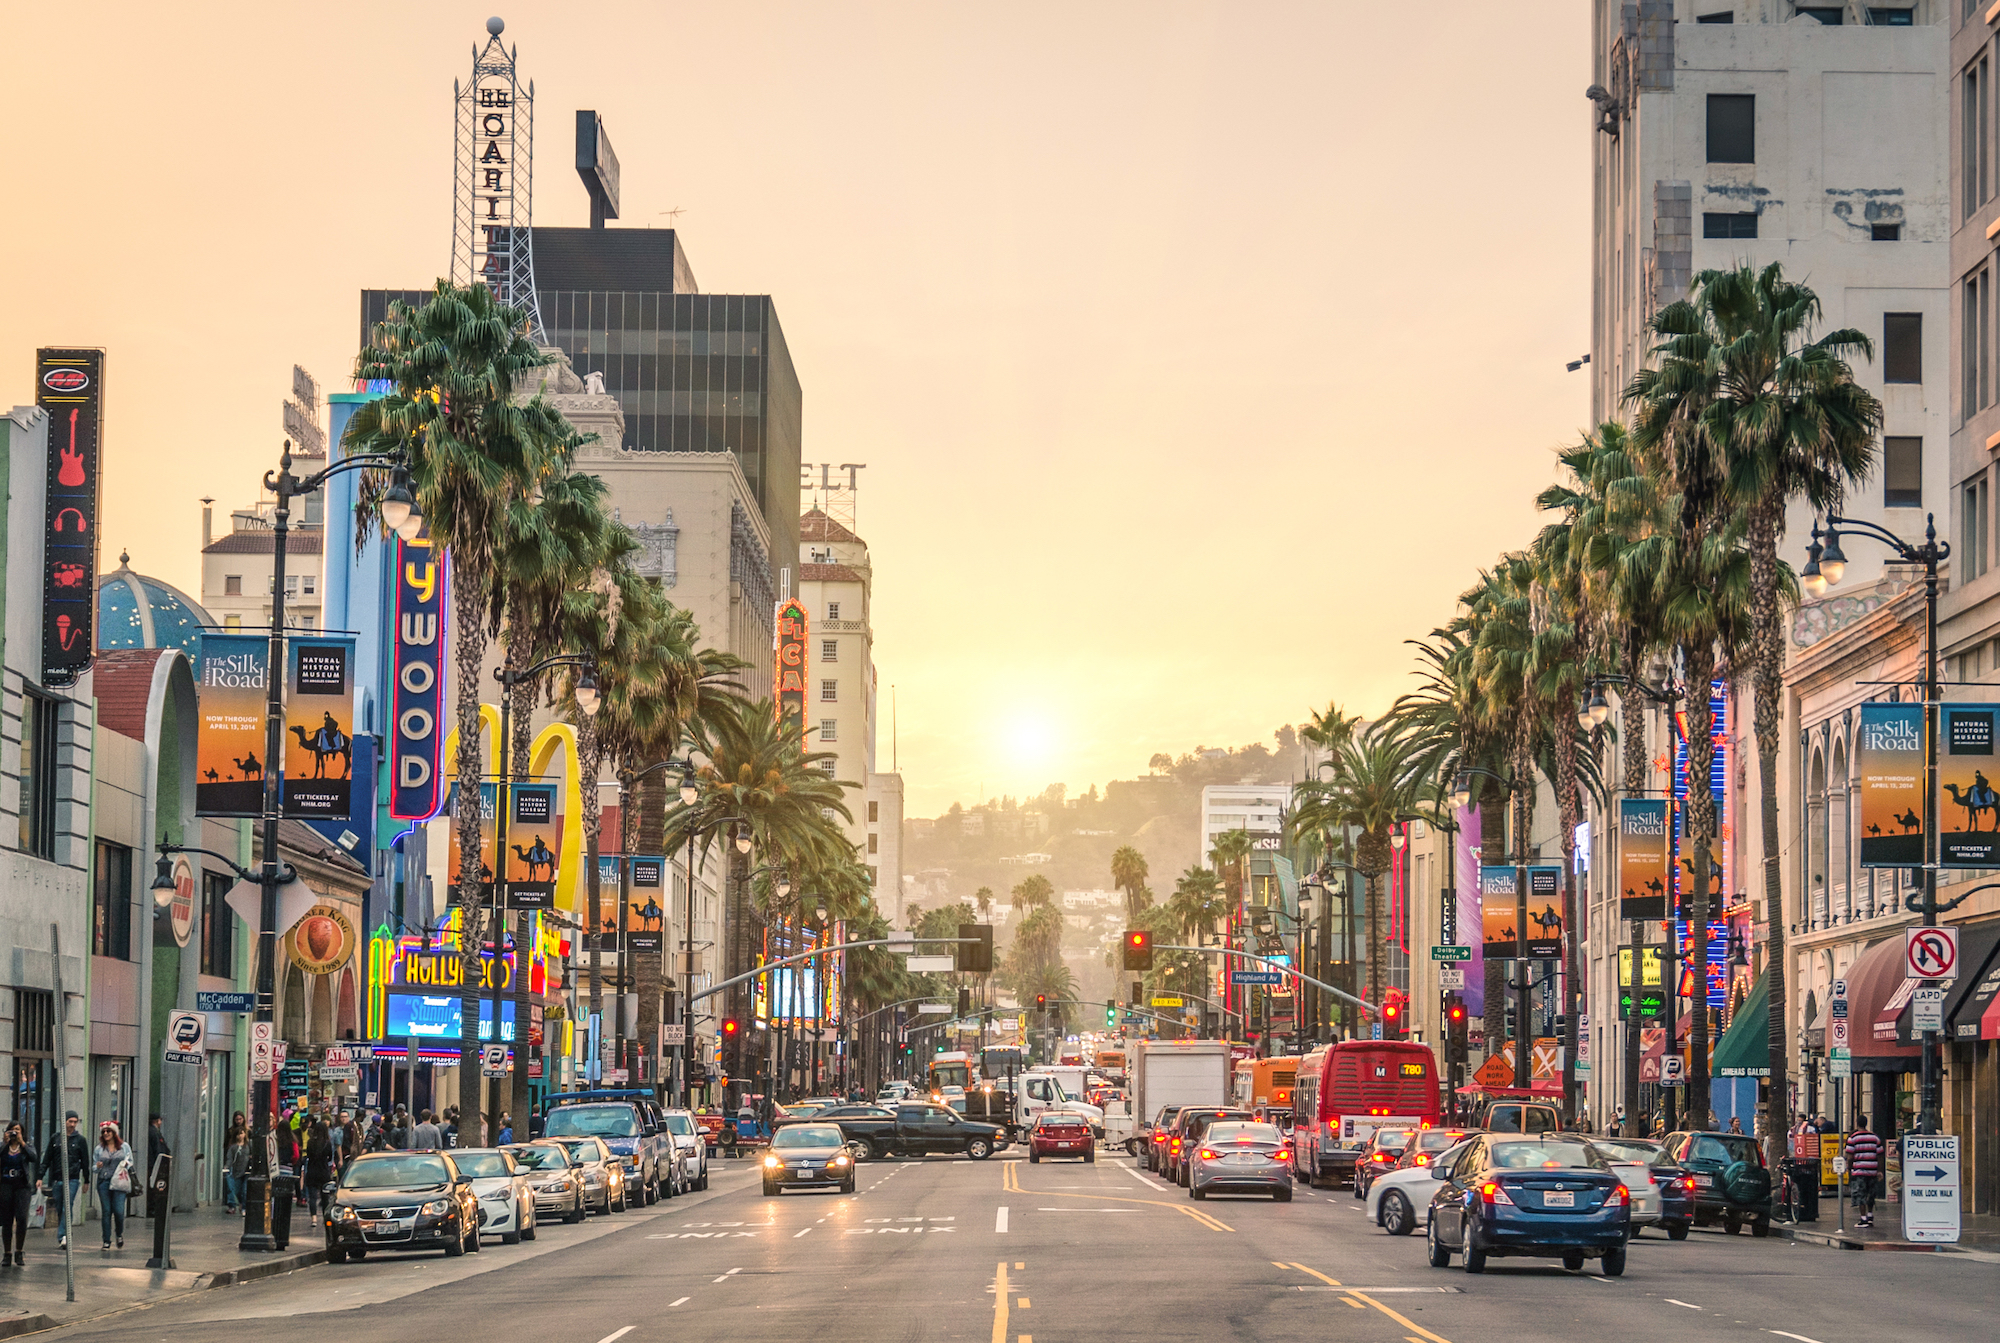 An evening photo of Hollywood Boulevard.